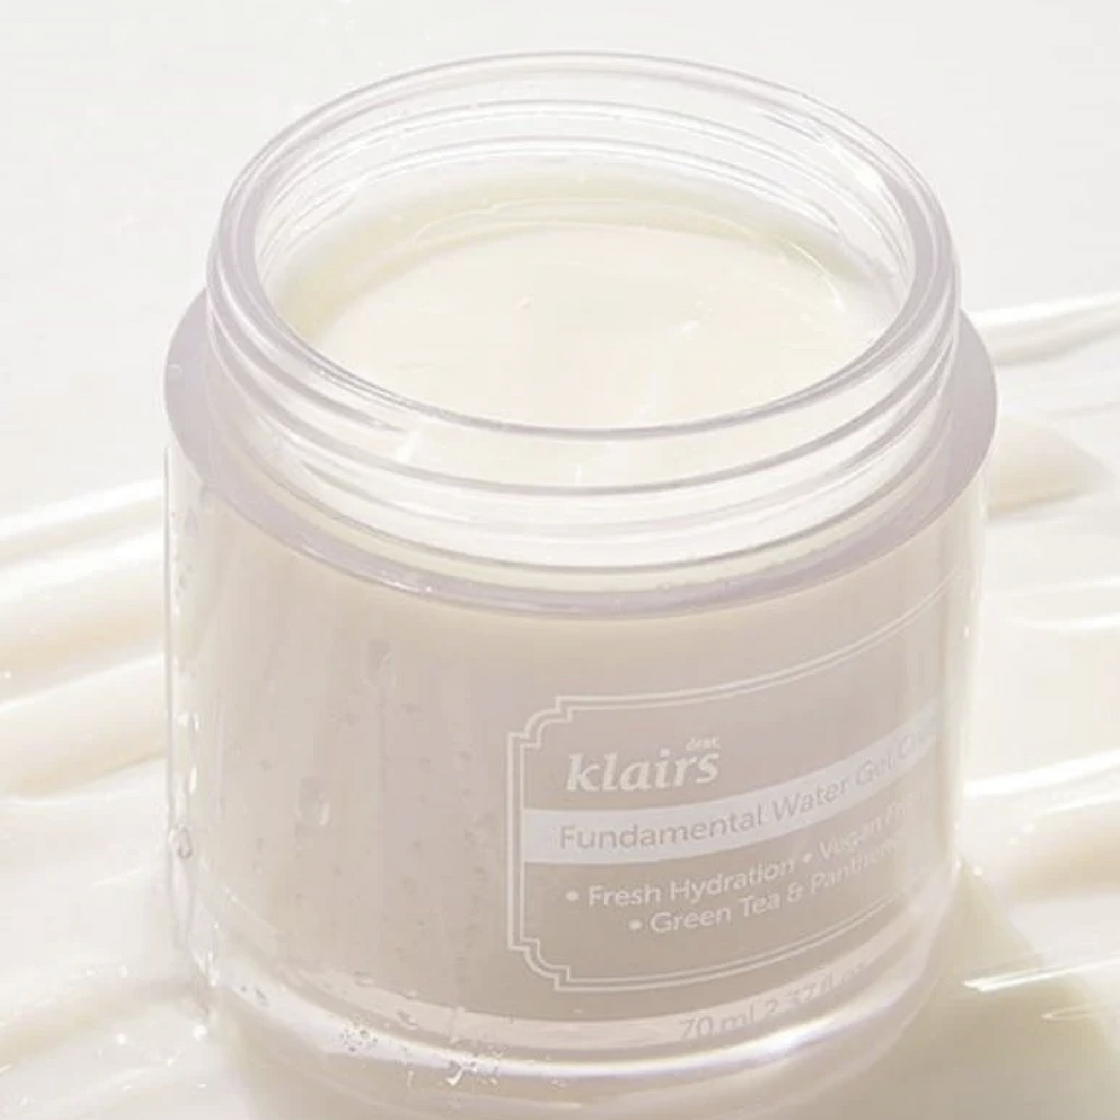 Klairs | Fundamental Water Gel Cream